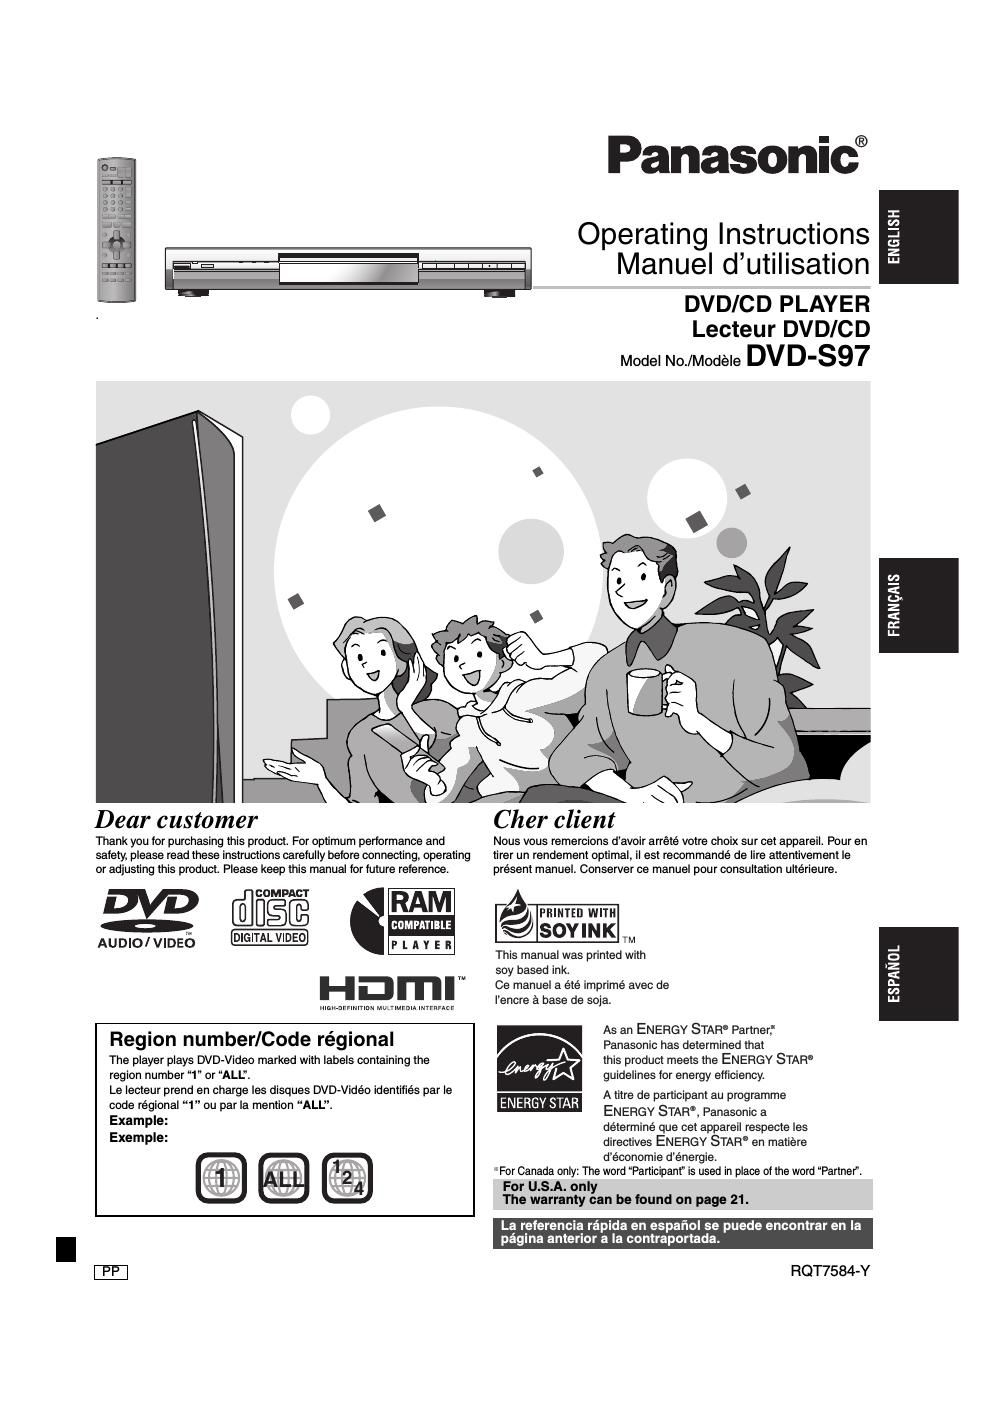 panasonic dvd s 97 owners manual